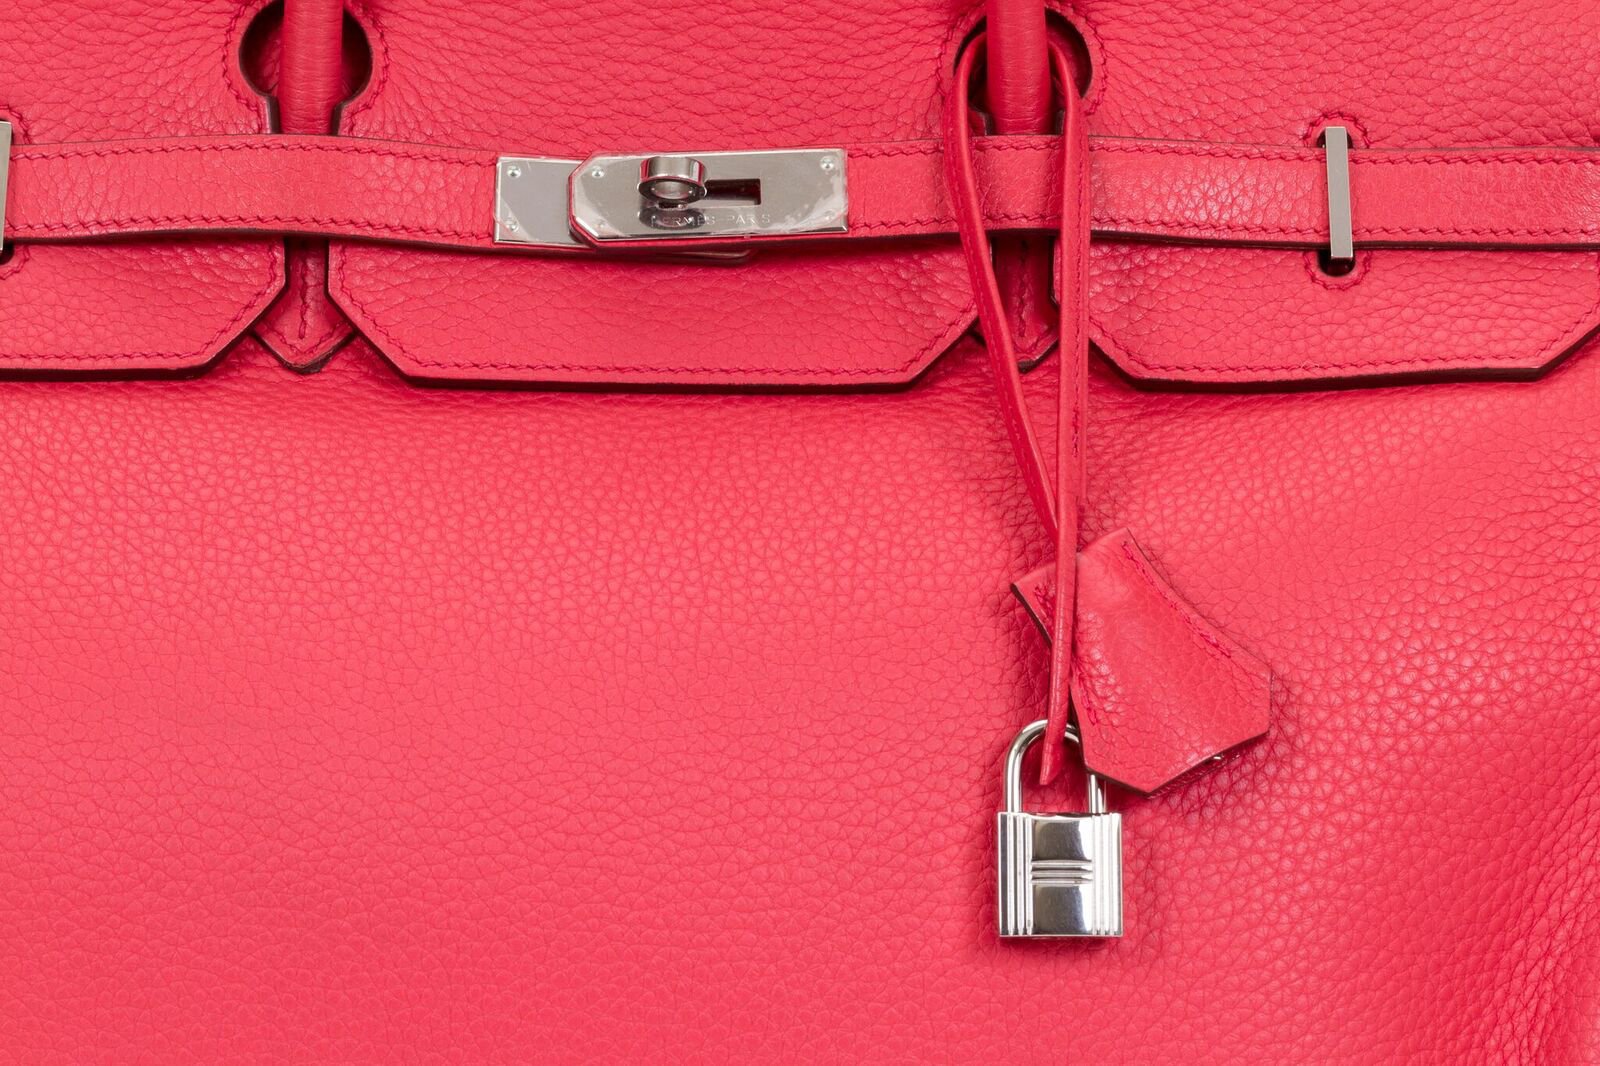 Hermès Birkin 25 Top Handle Bag in Togo Leather, Gold Hardware